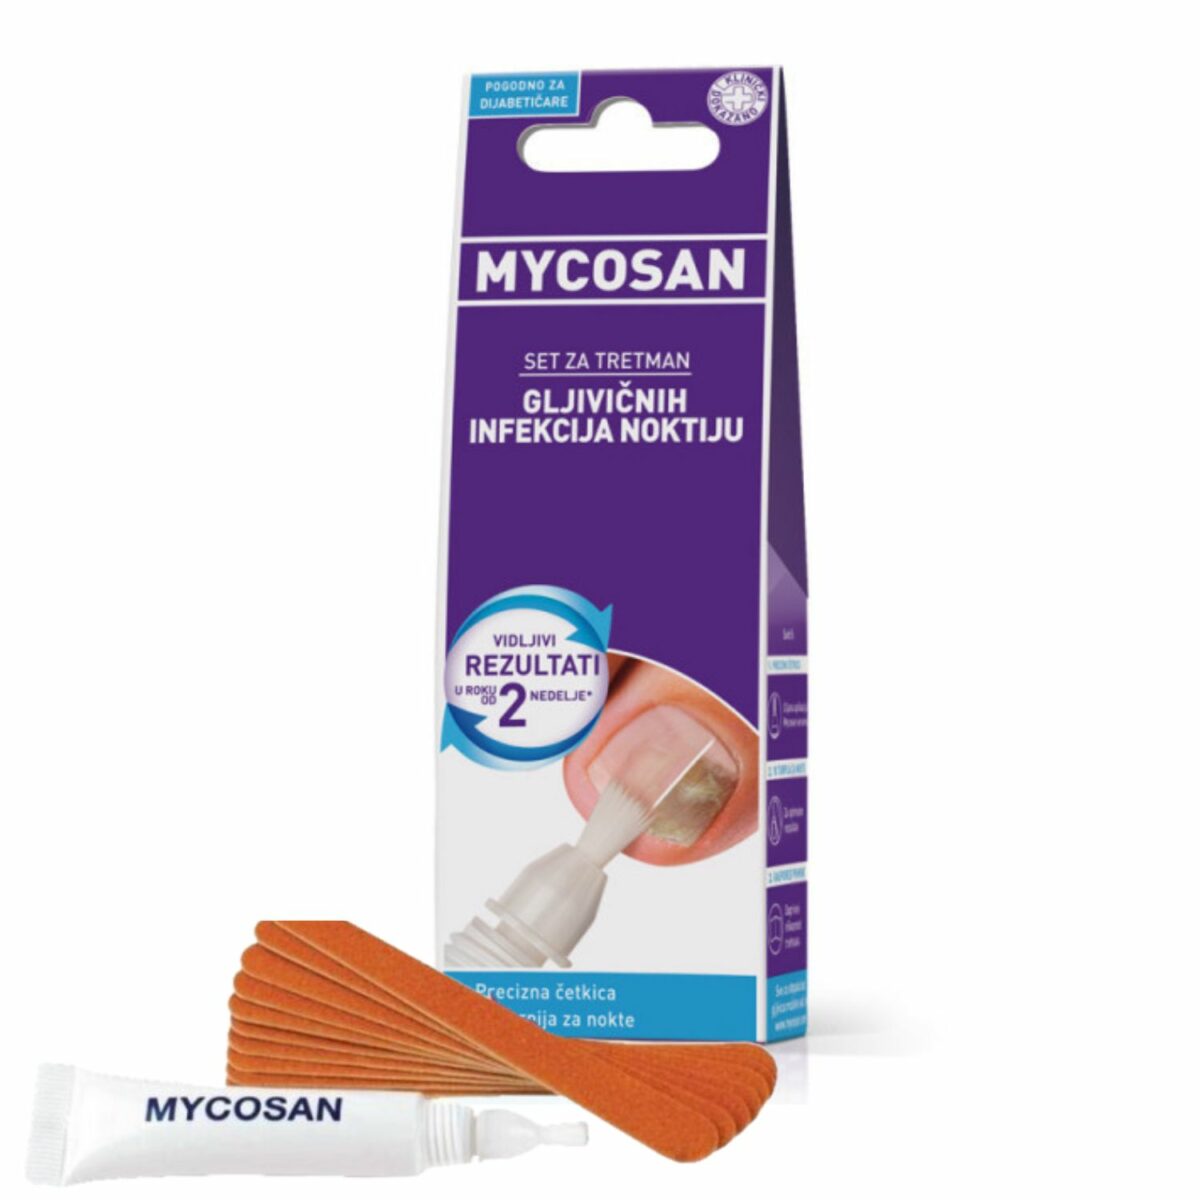 Mycosan set (serum+turpije) 5ml